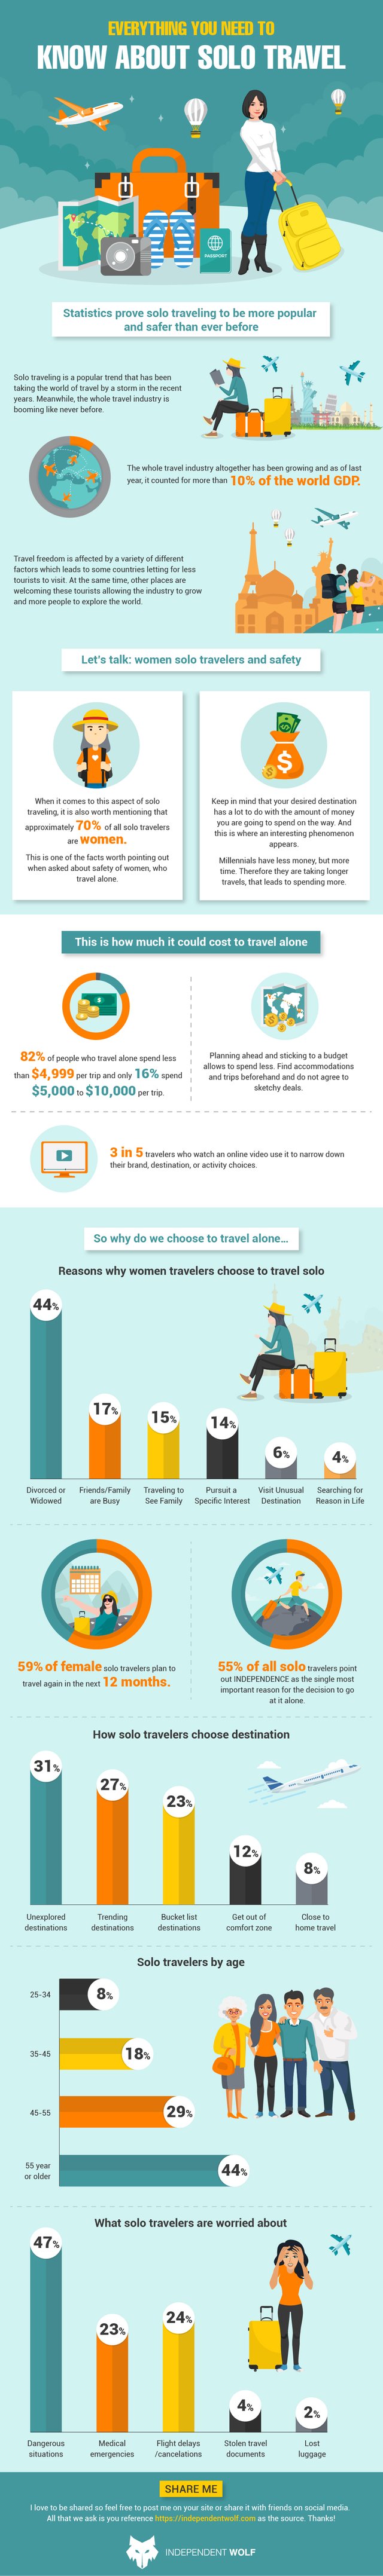 solo-travel-infographic.jpg